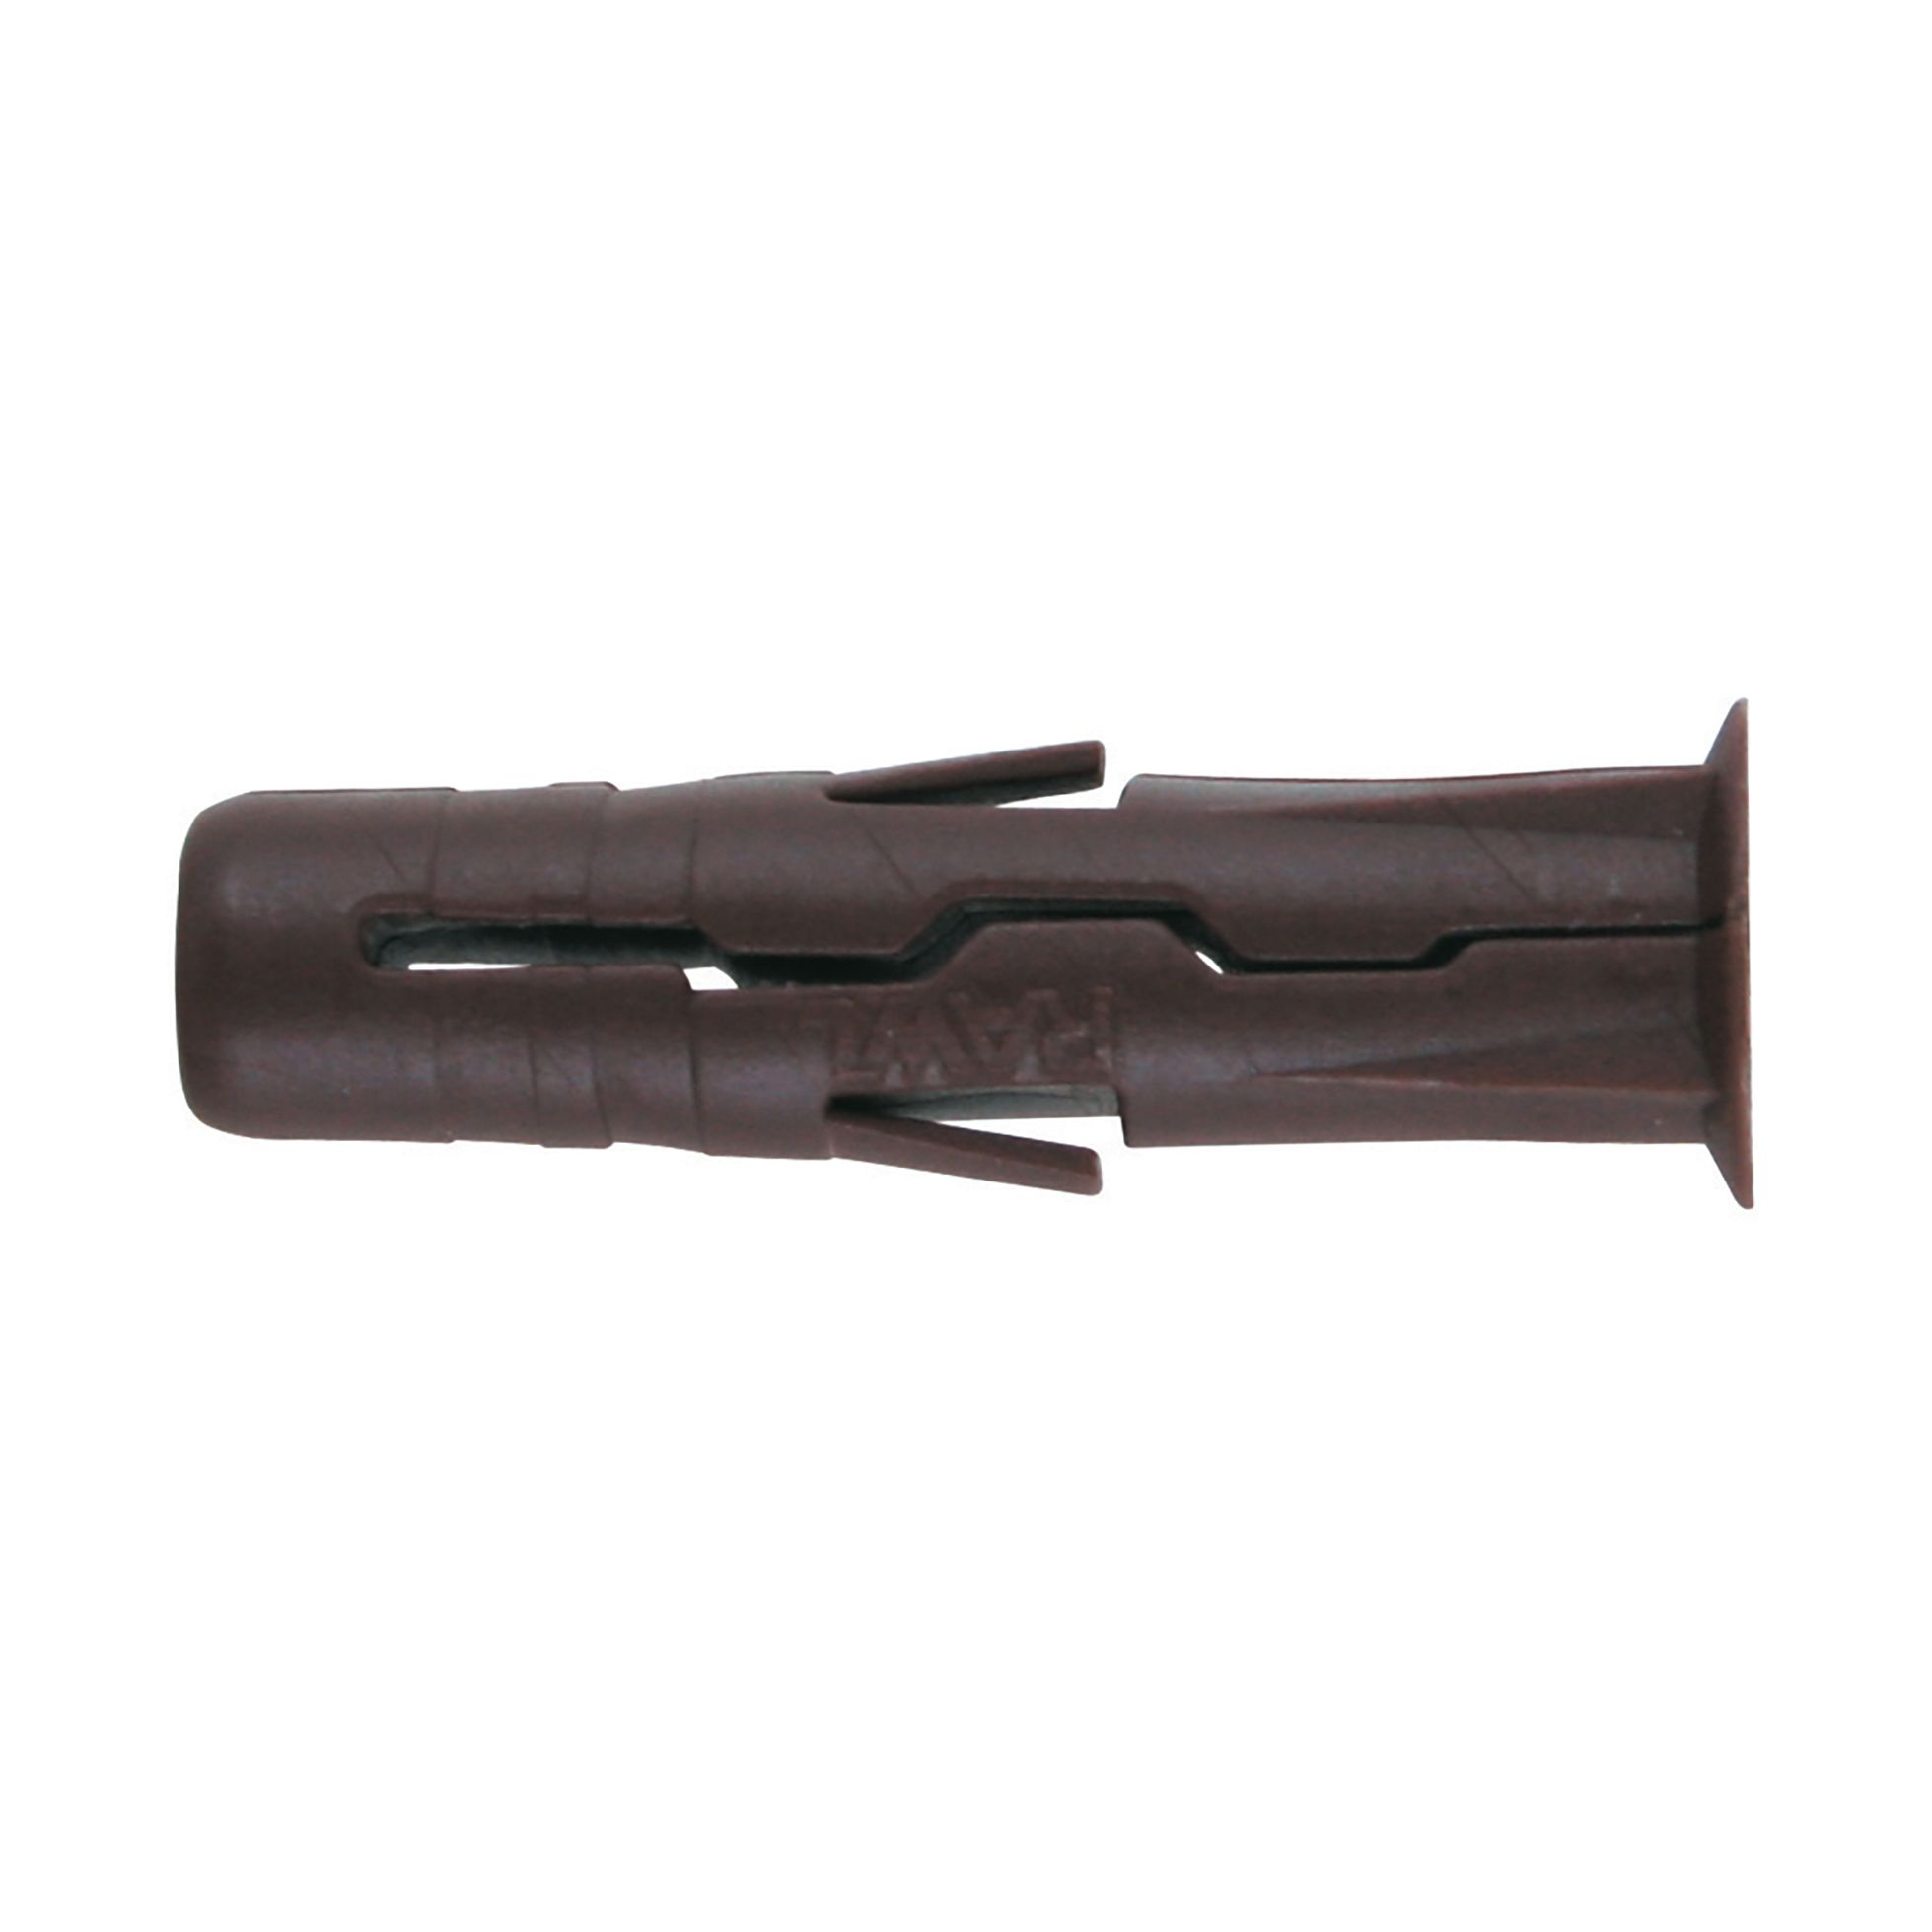 Rawlplug Uno Brown Multi-purpose screw & wall plug (Dia)7mm (L)30mm, Pack of 24